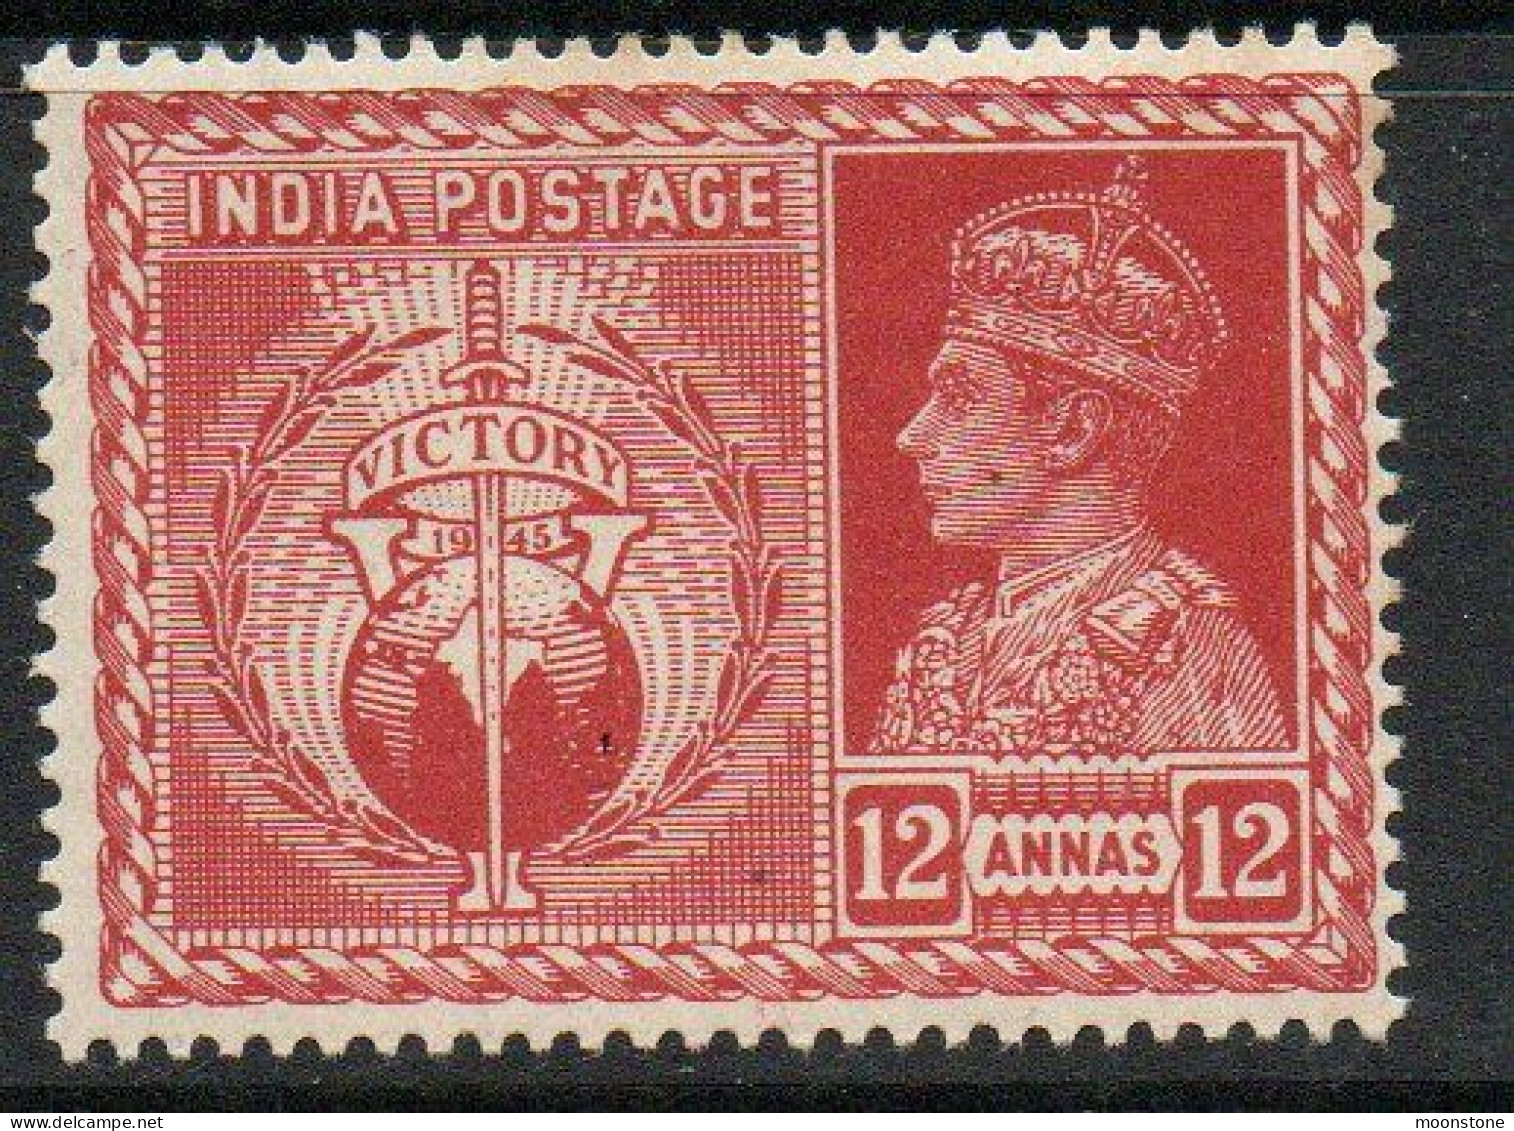 India 1946 GVI Victory 12 Annas Claret, Wmk. Multiple Star, MNH, SG 281 (E) - 1936-47 Koning George VI